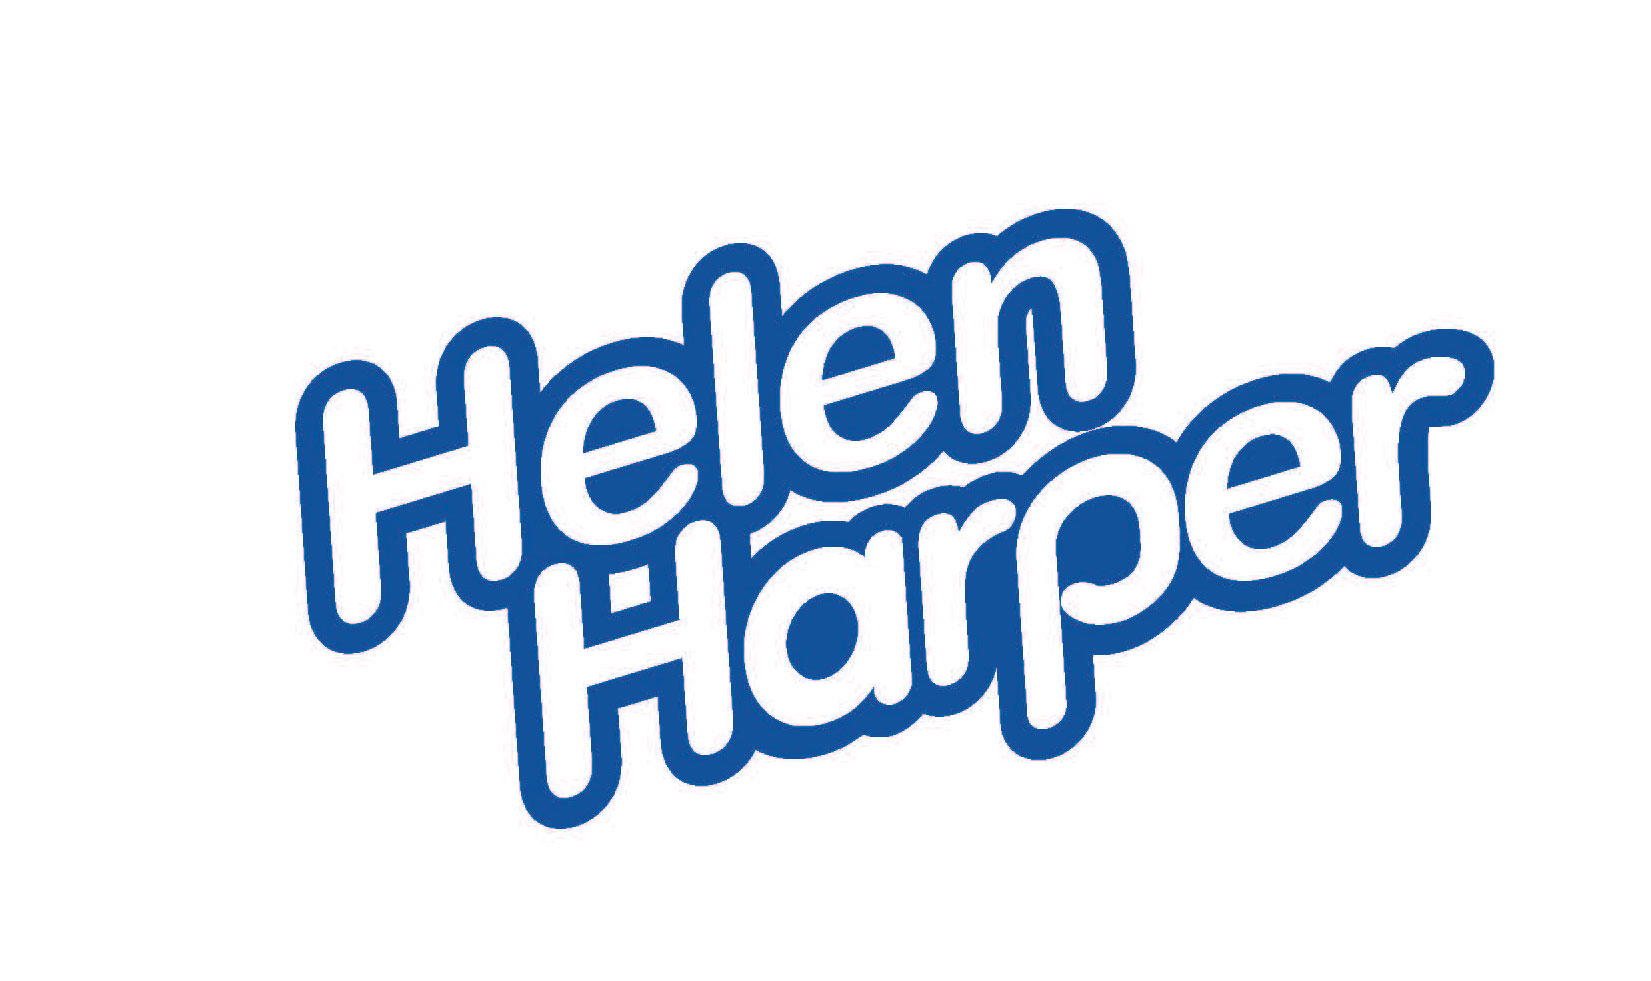  .  Helen Harper.       .  24  30.09